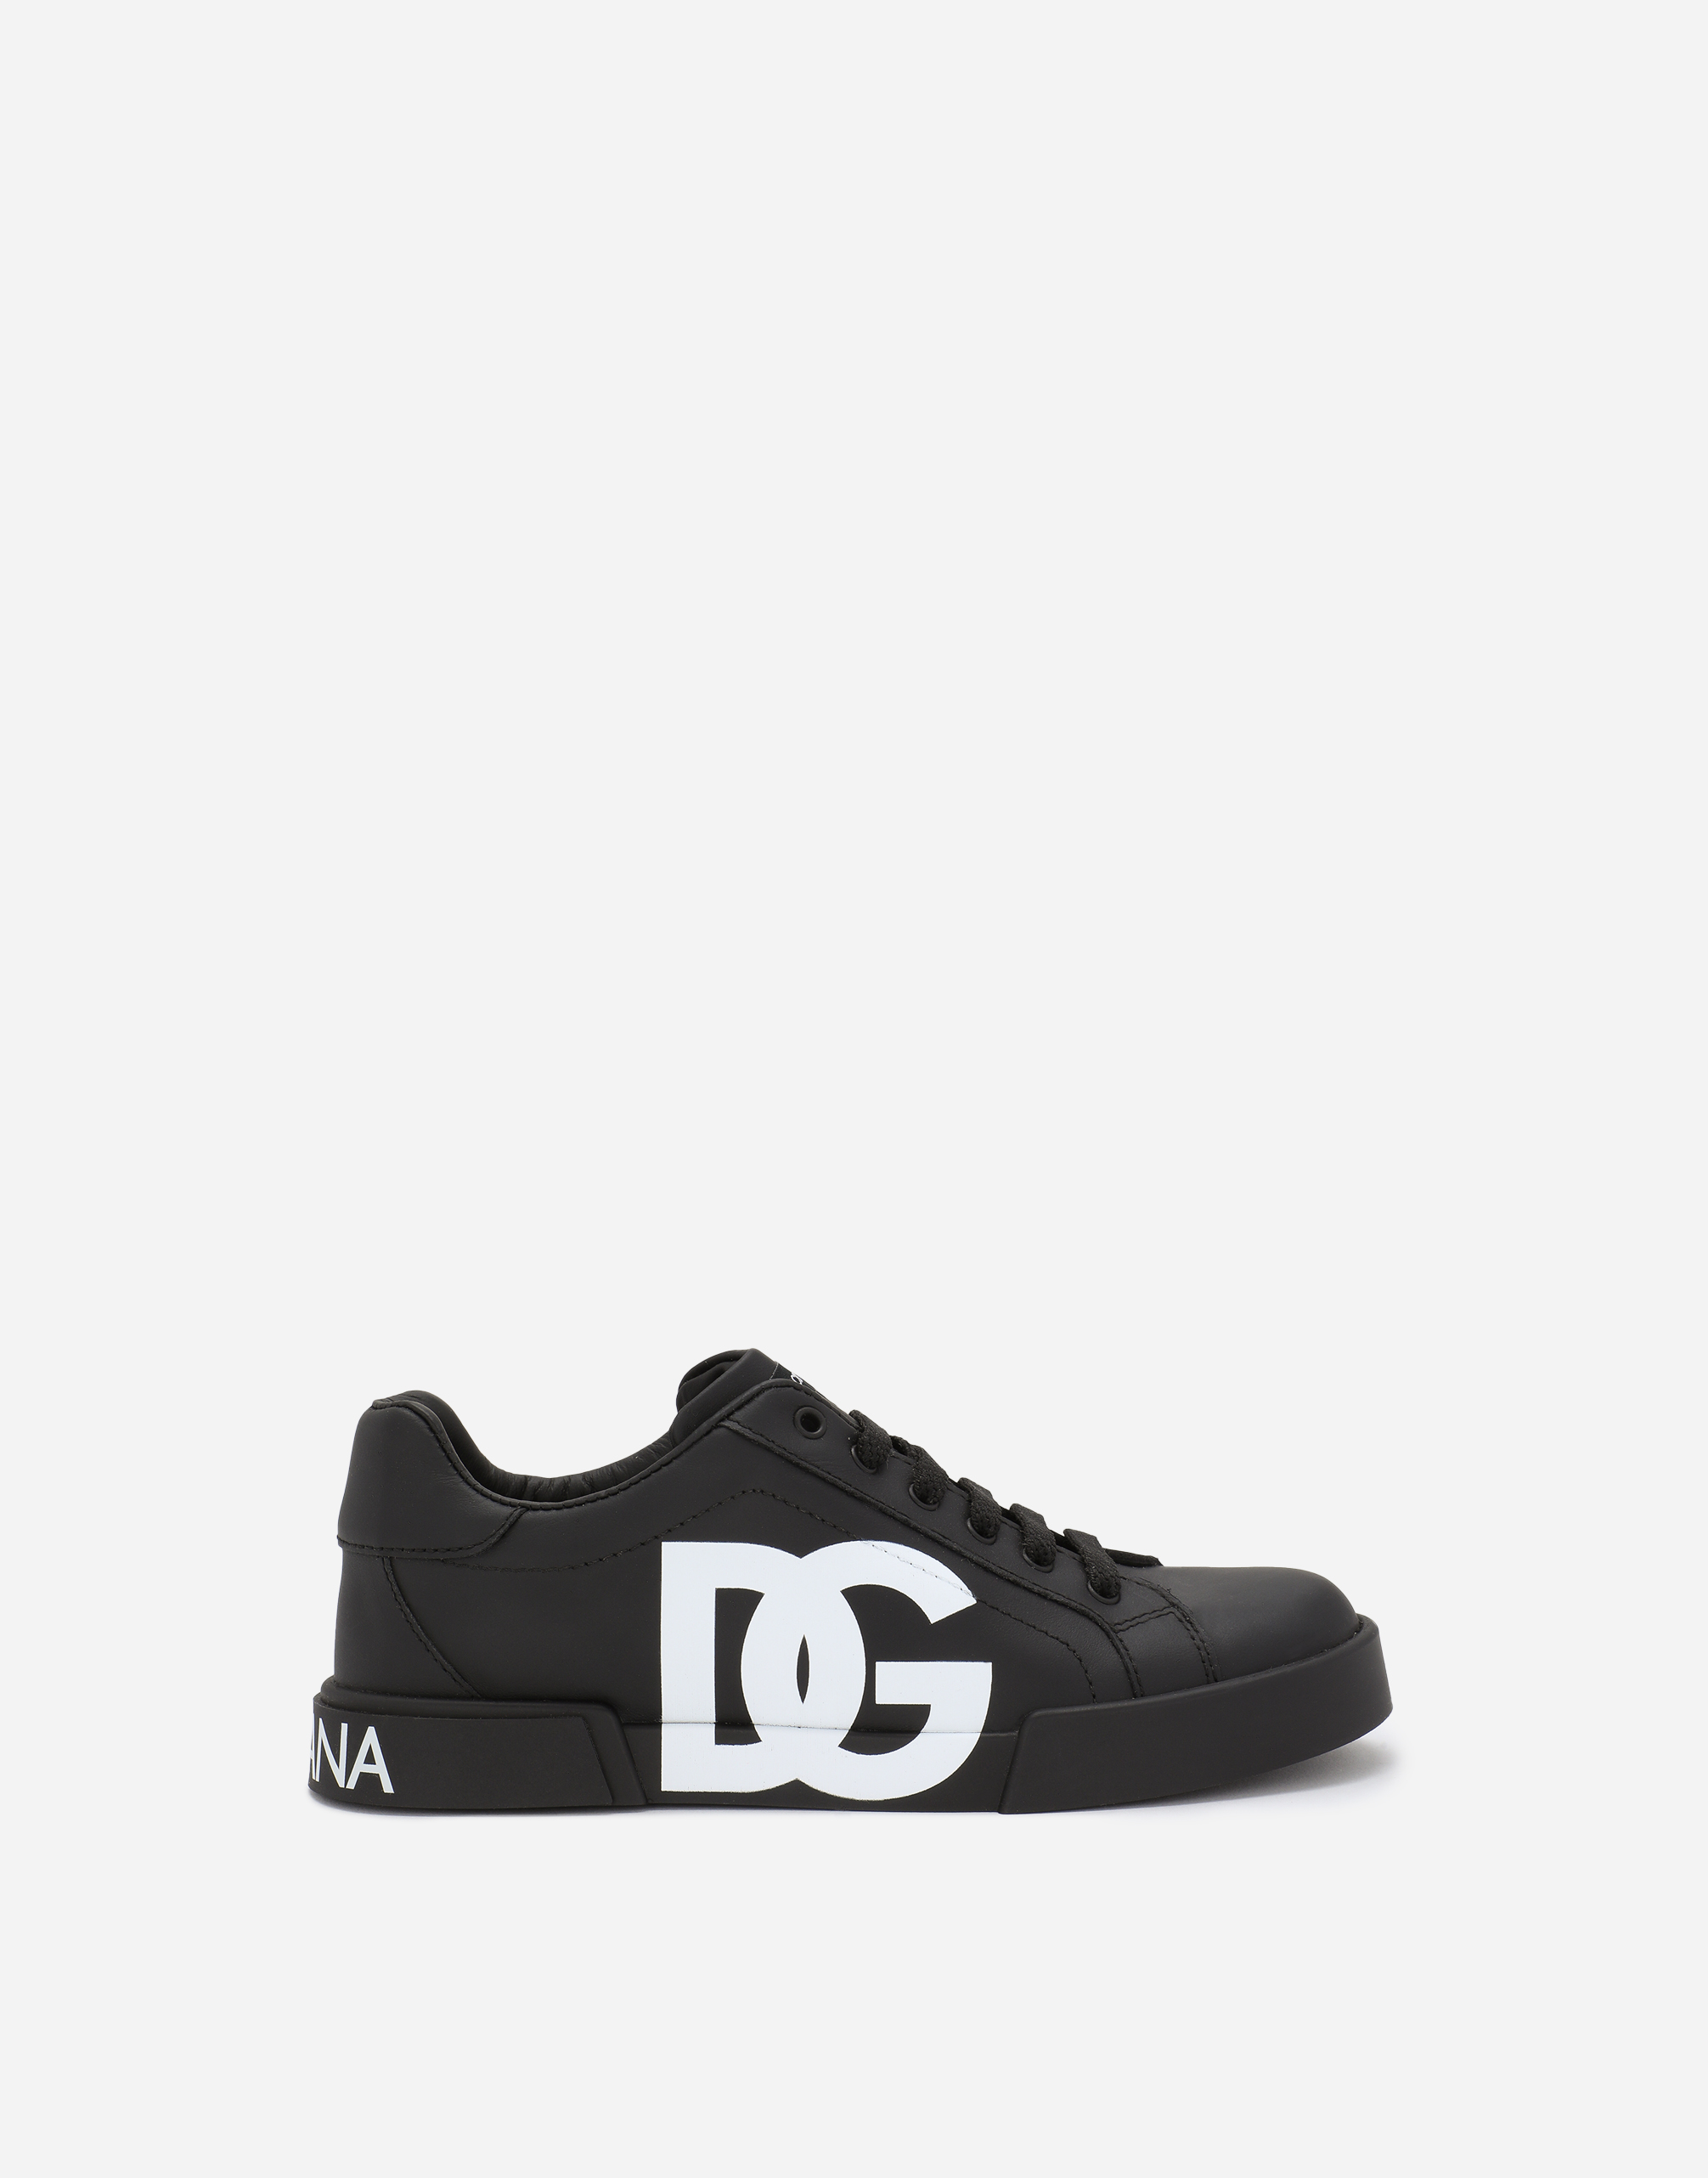 Portofino Light sneakers with DG logo in Black